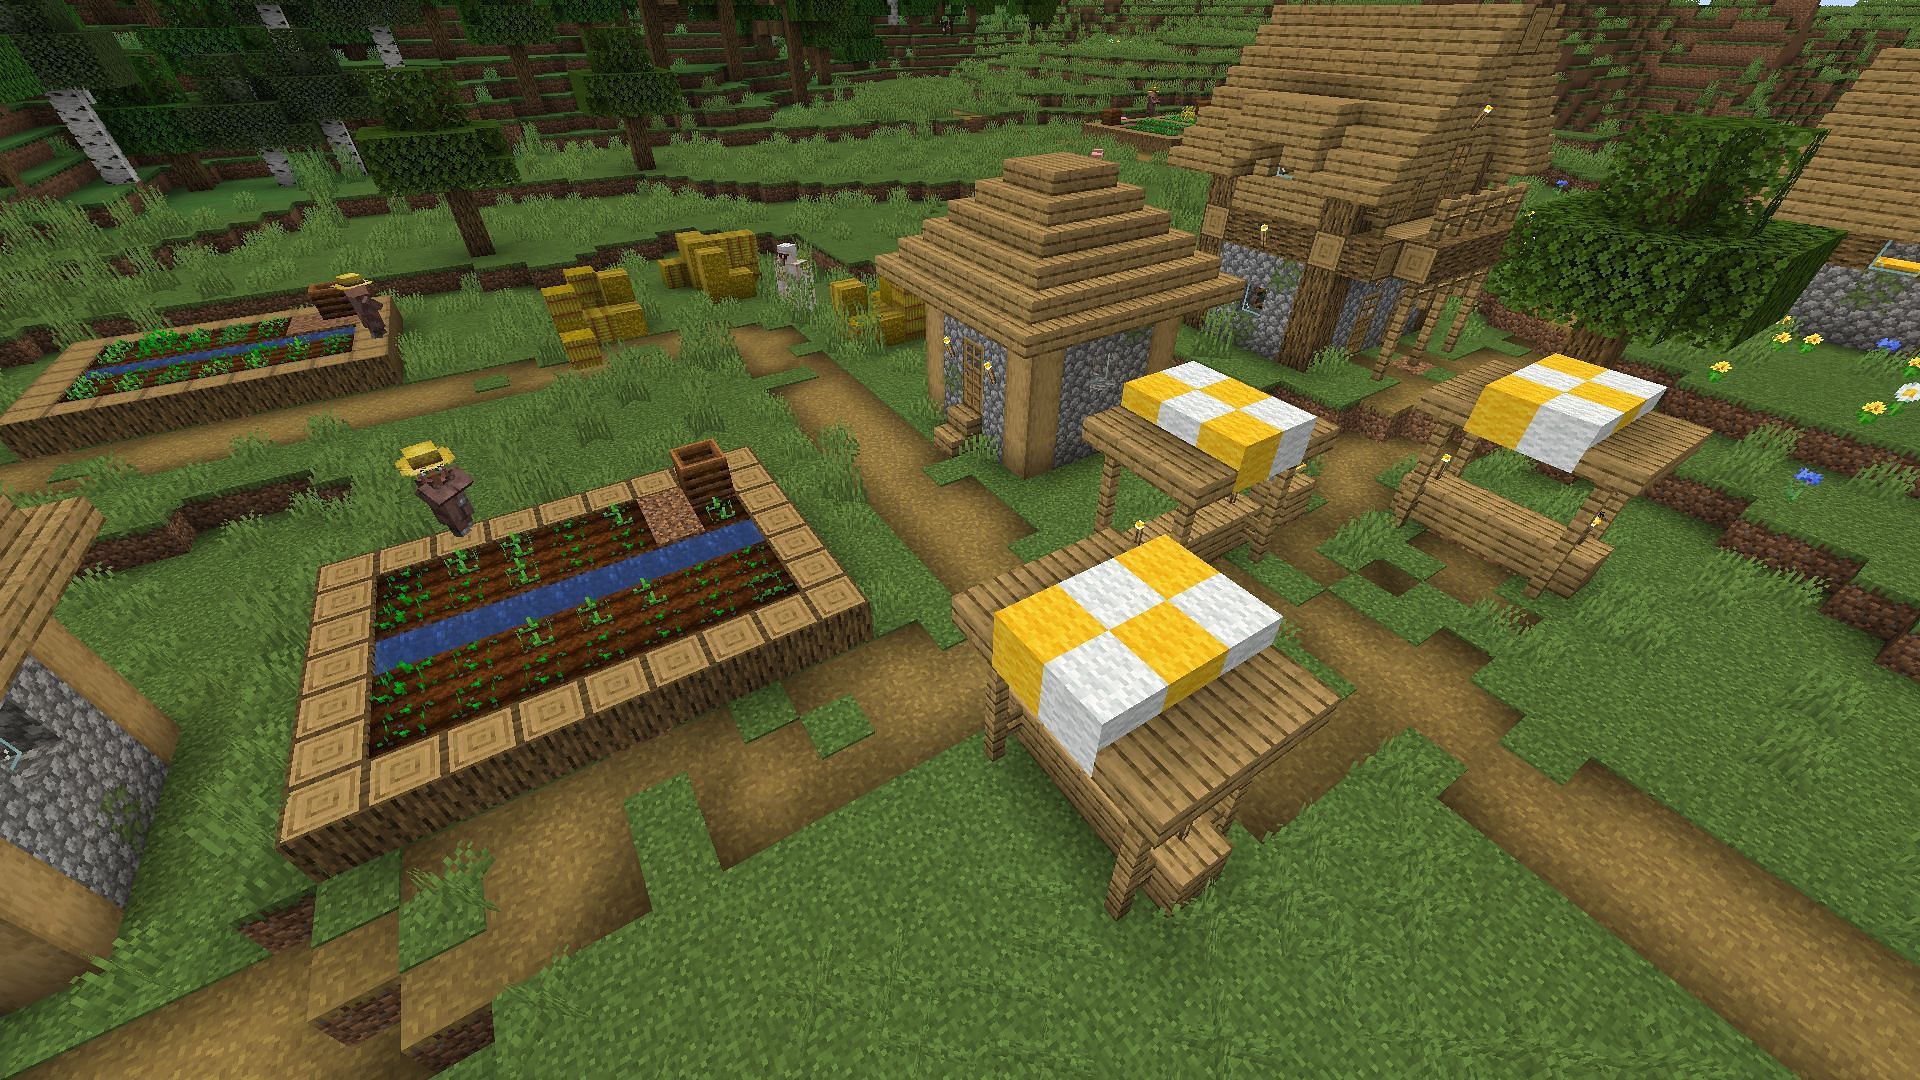 A village with a farm (Image via Minecraft)